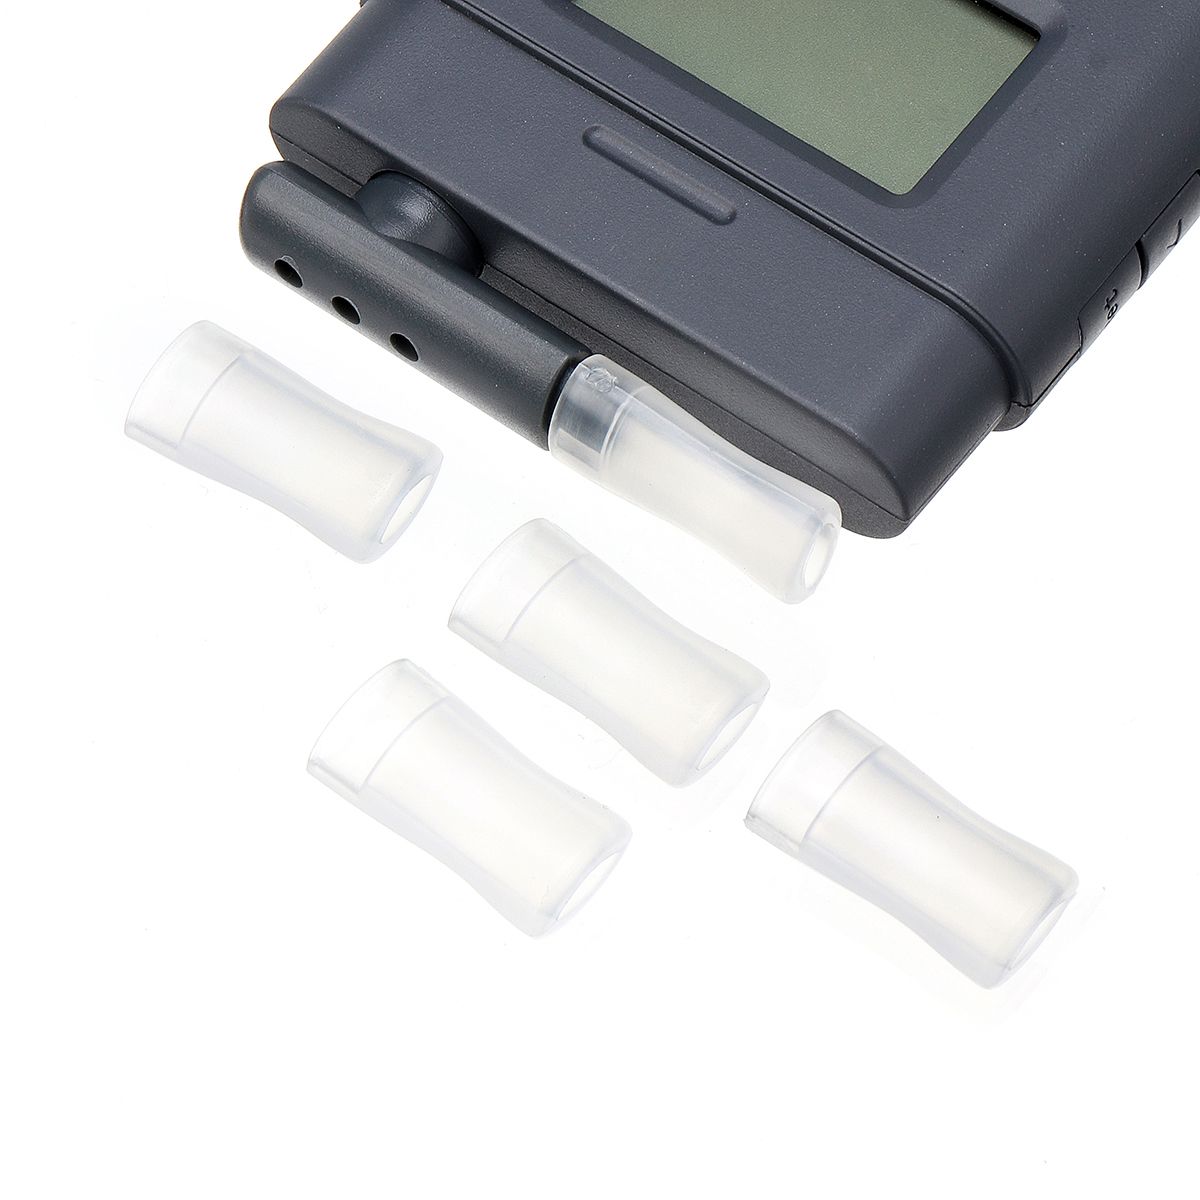 Digital-LCD-Breathalyzer-Meter-Police-Breath-Alcohol-Tester-Analyzer-Detector-1358426